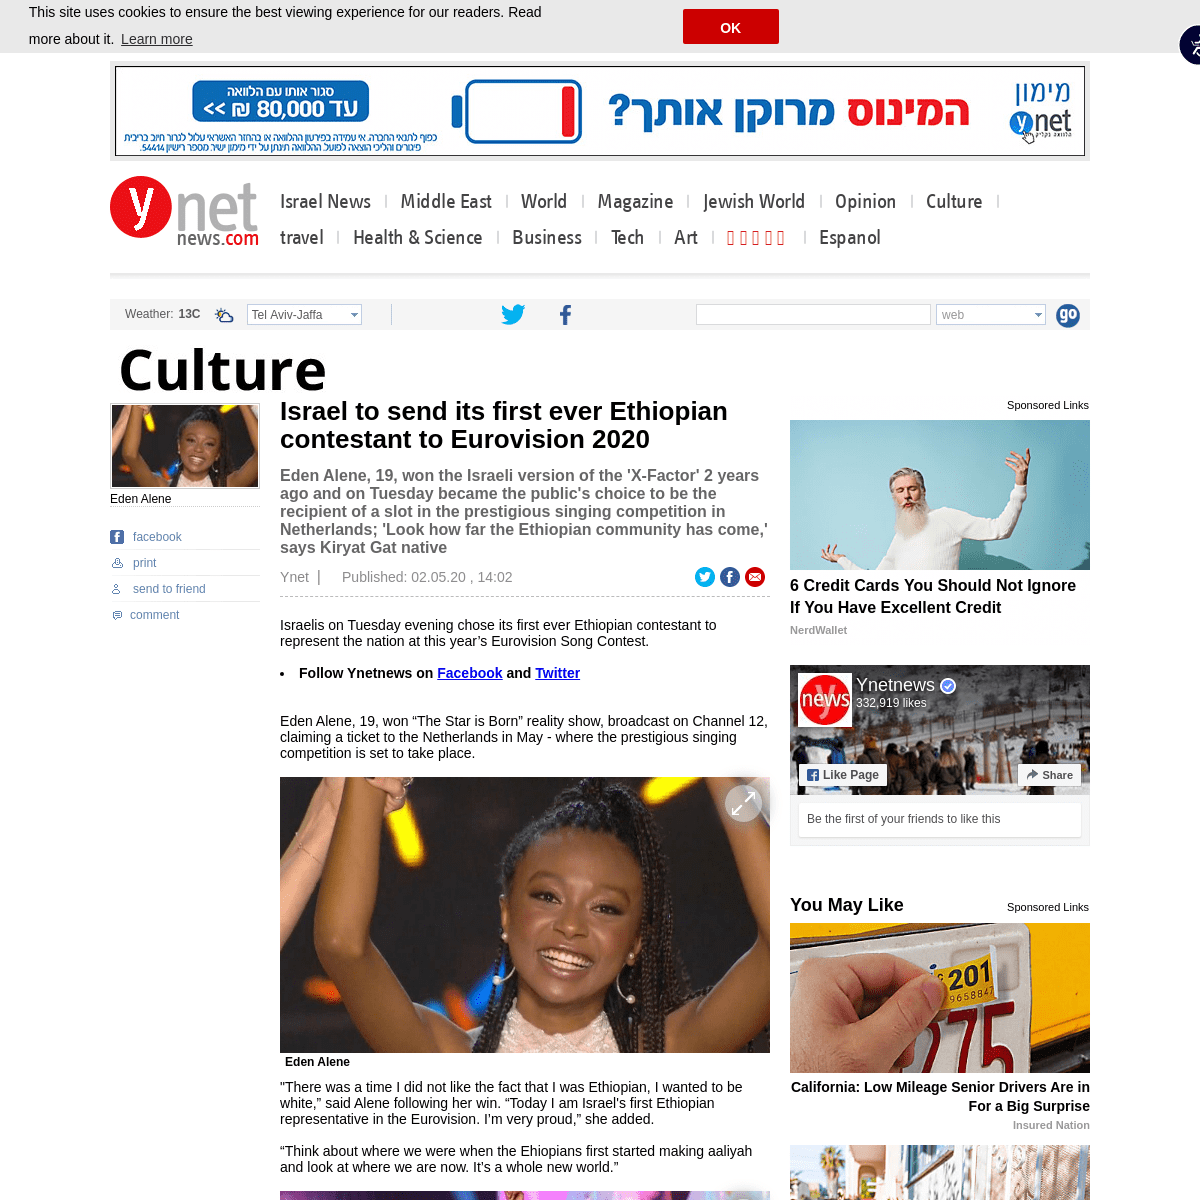 A complete backup of www.ynetnews.com/culture/article/rkJoi7uM8